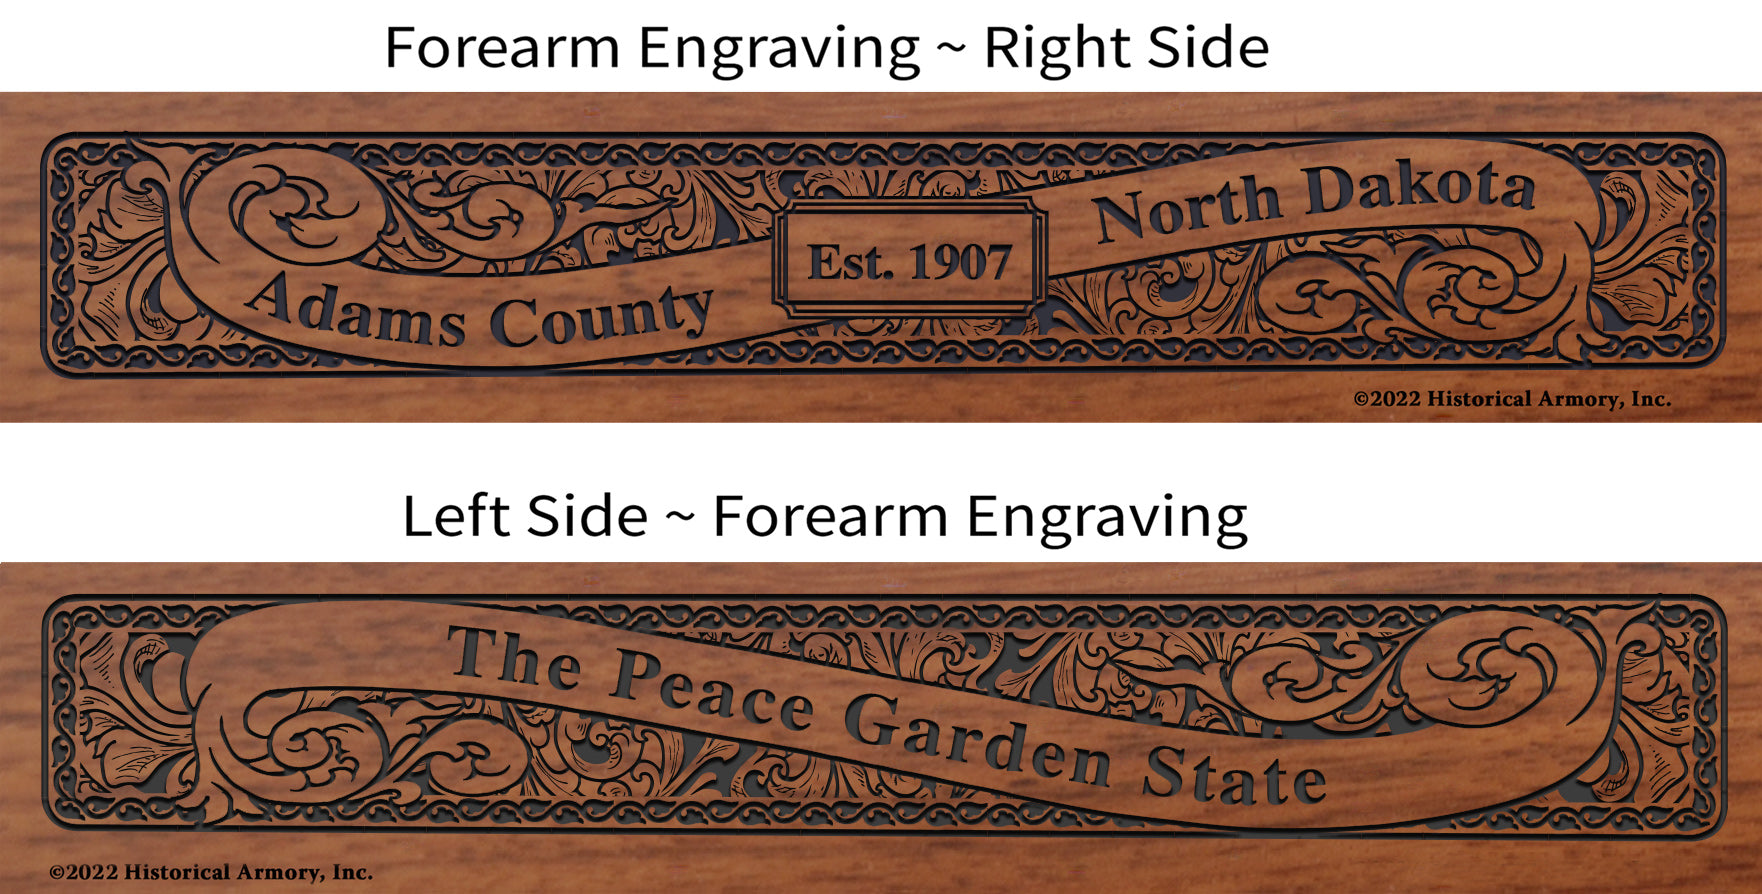 Adams County North Dakota Engraved Rifle Forearm